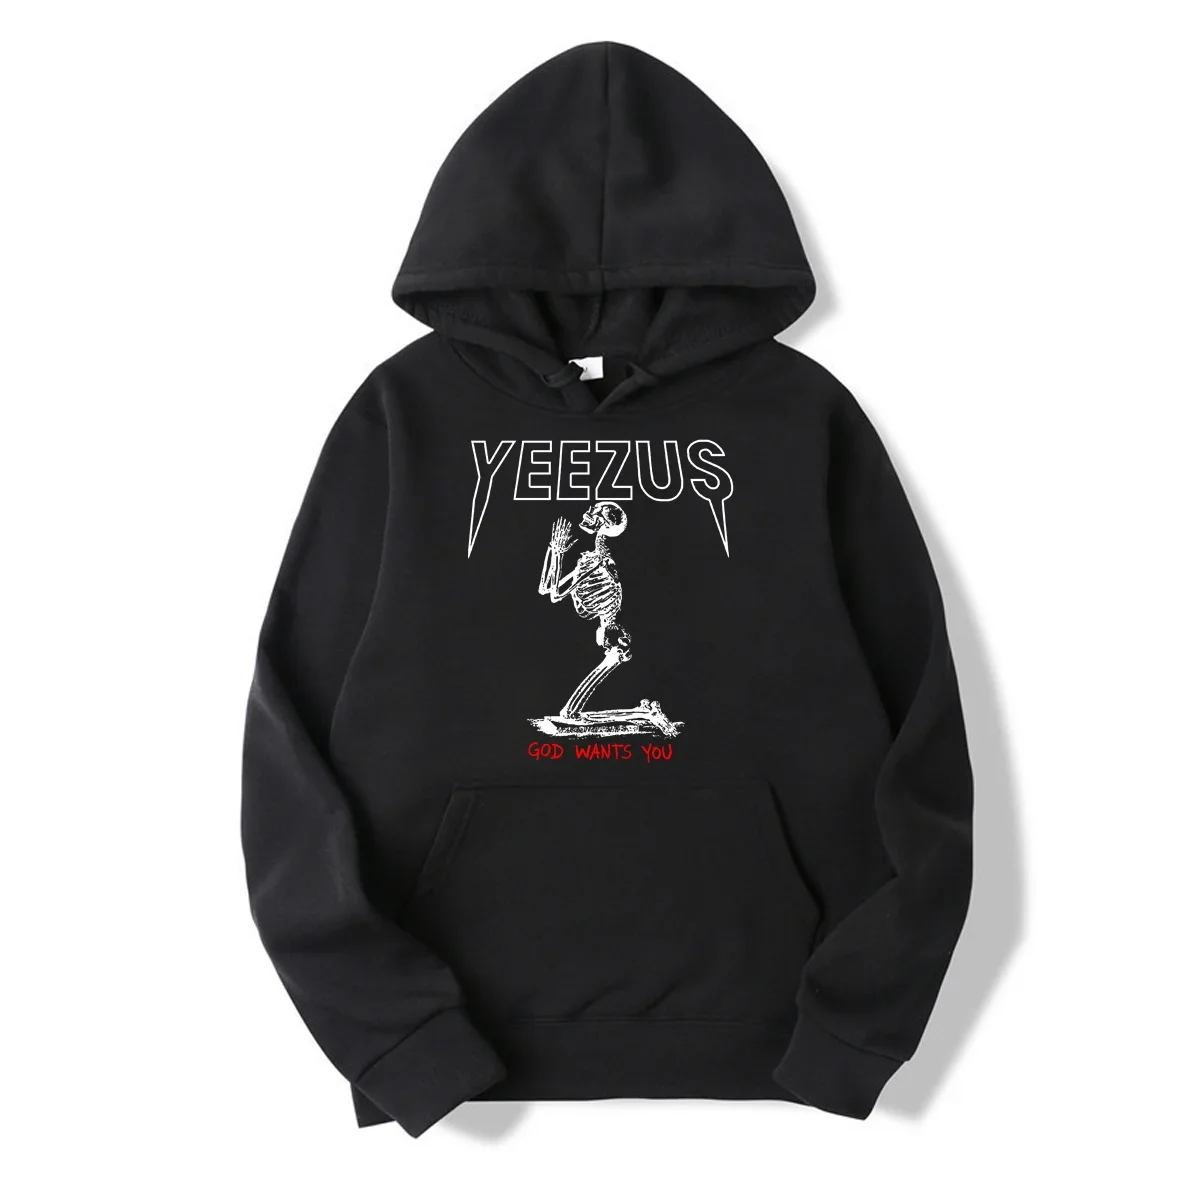 

Winter Cotton Essential Men Yeezus Tour Hip Hop Rap Kanye West God Wants You Hoodie Sweatshirts Graphic Hoodies Unisex M-5XL